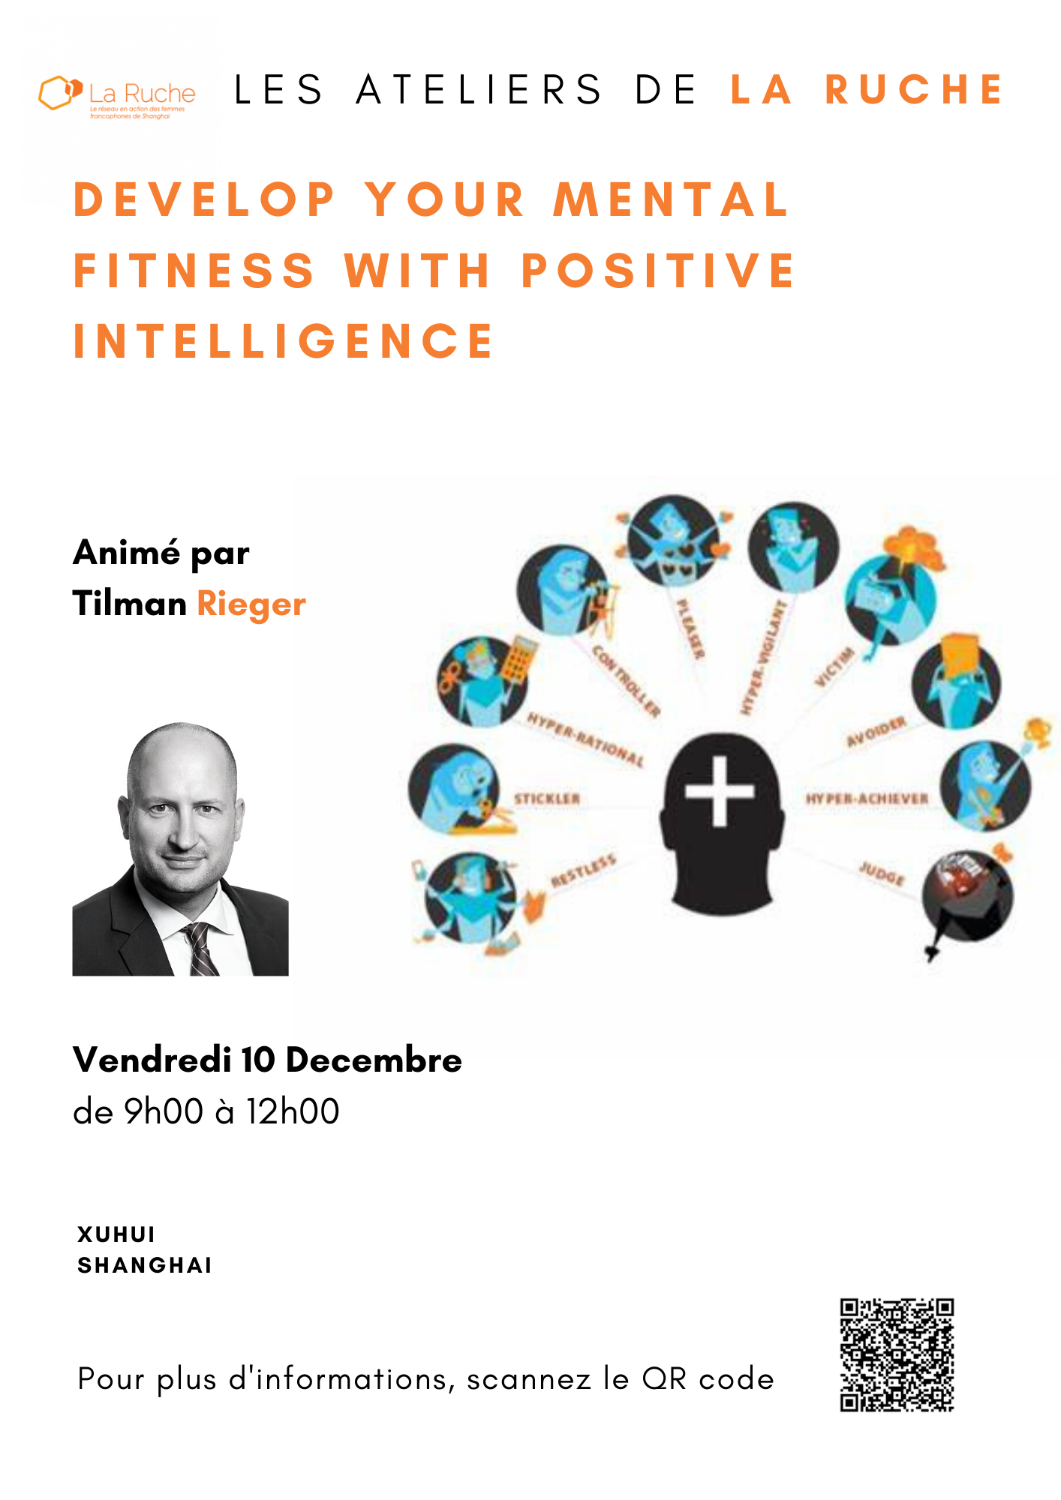 vendredi 10 décembre - Atelier Develop your mental fitness with positive intelligence